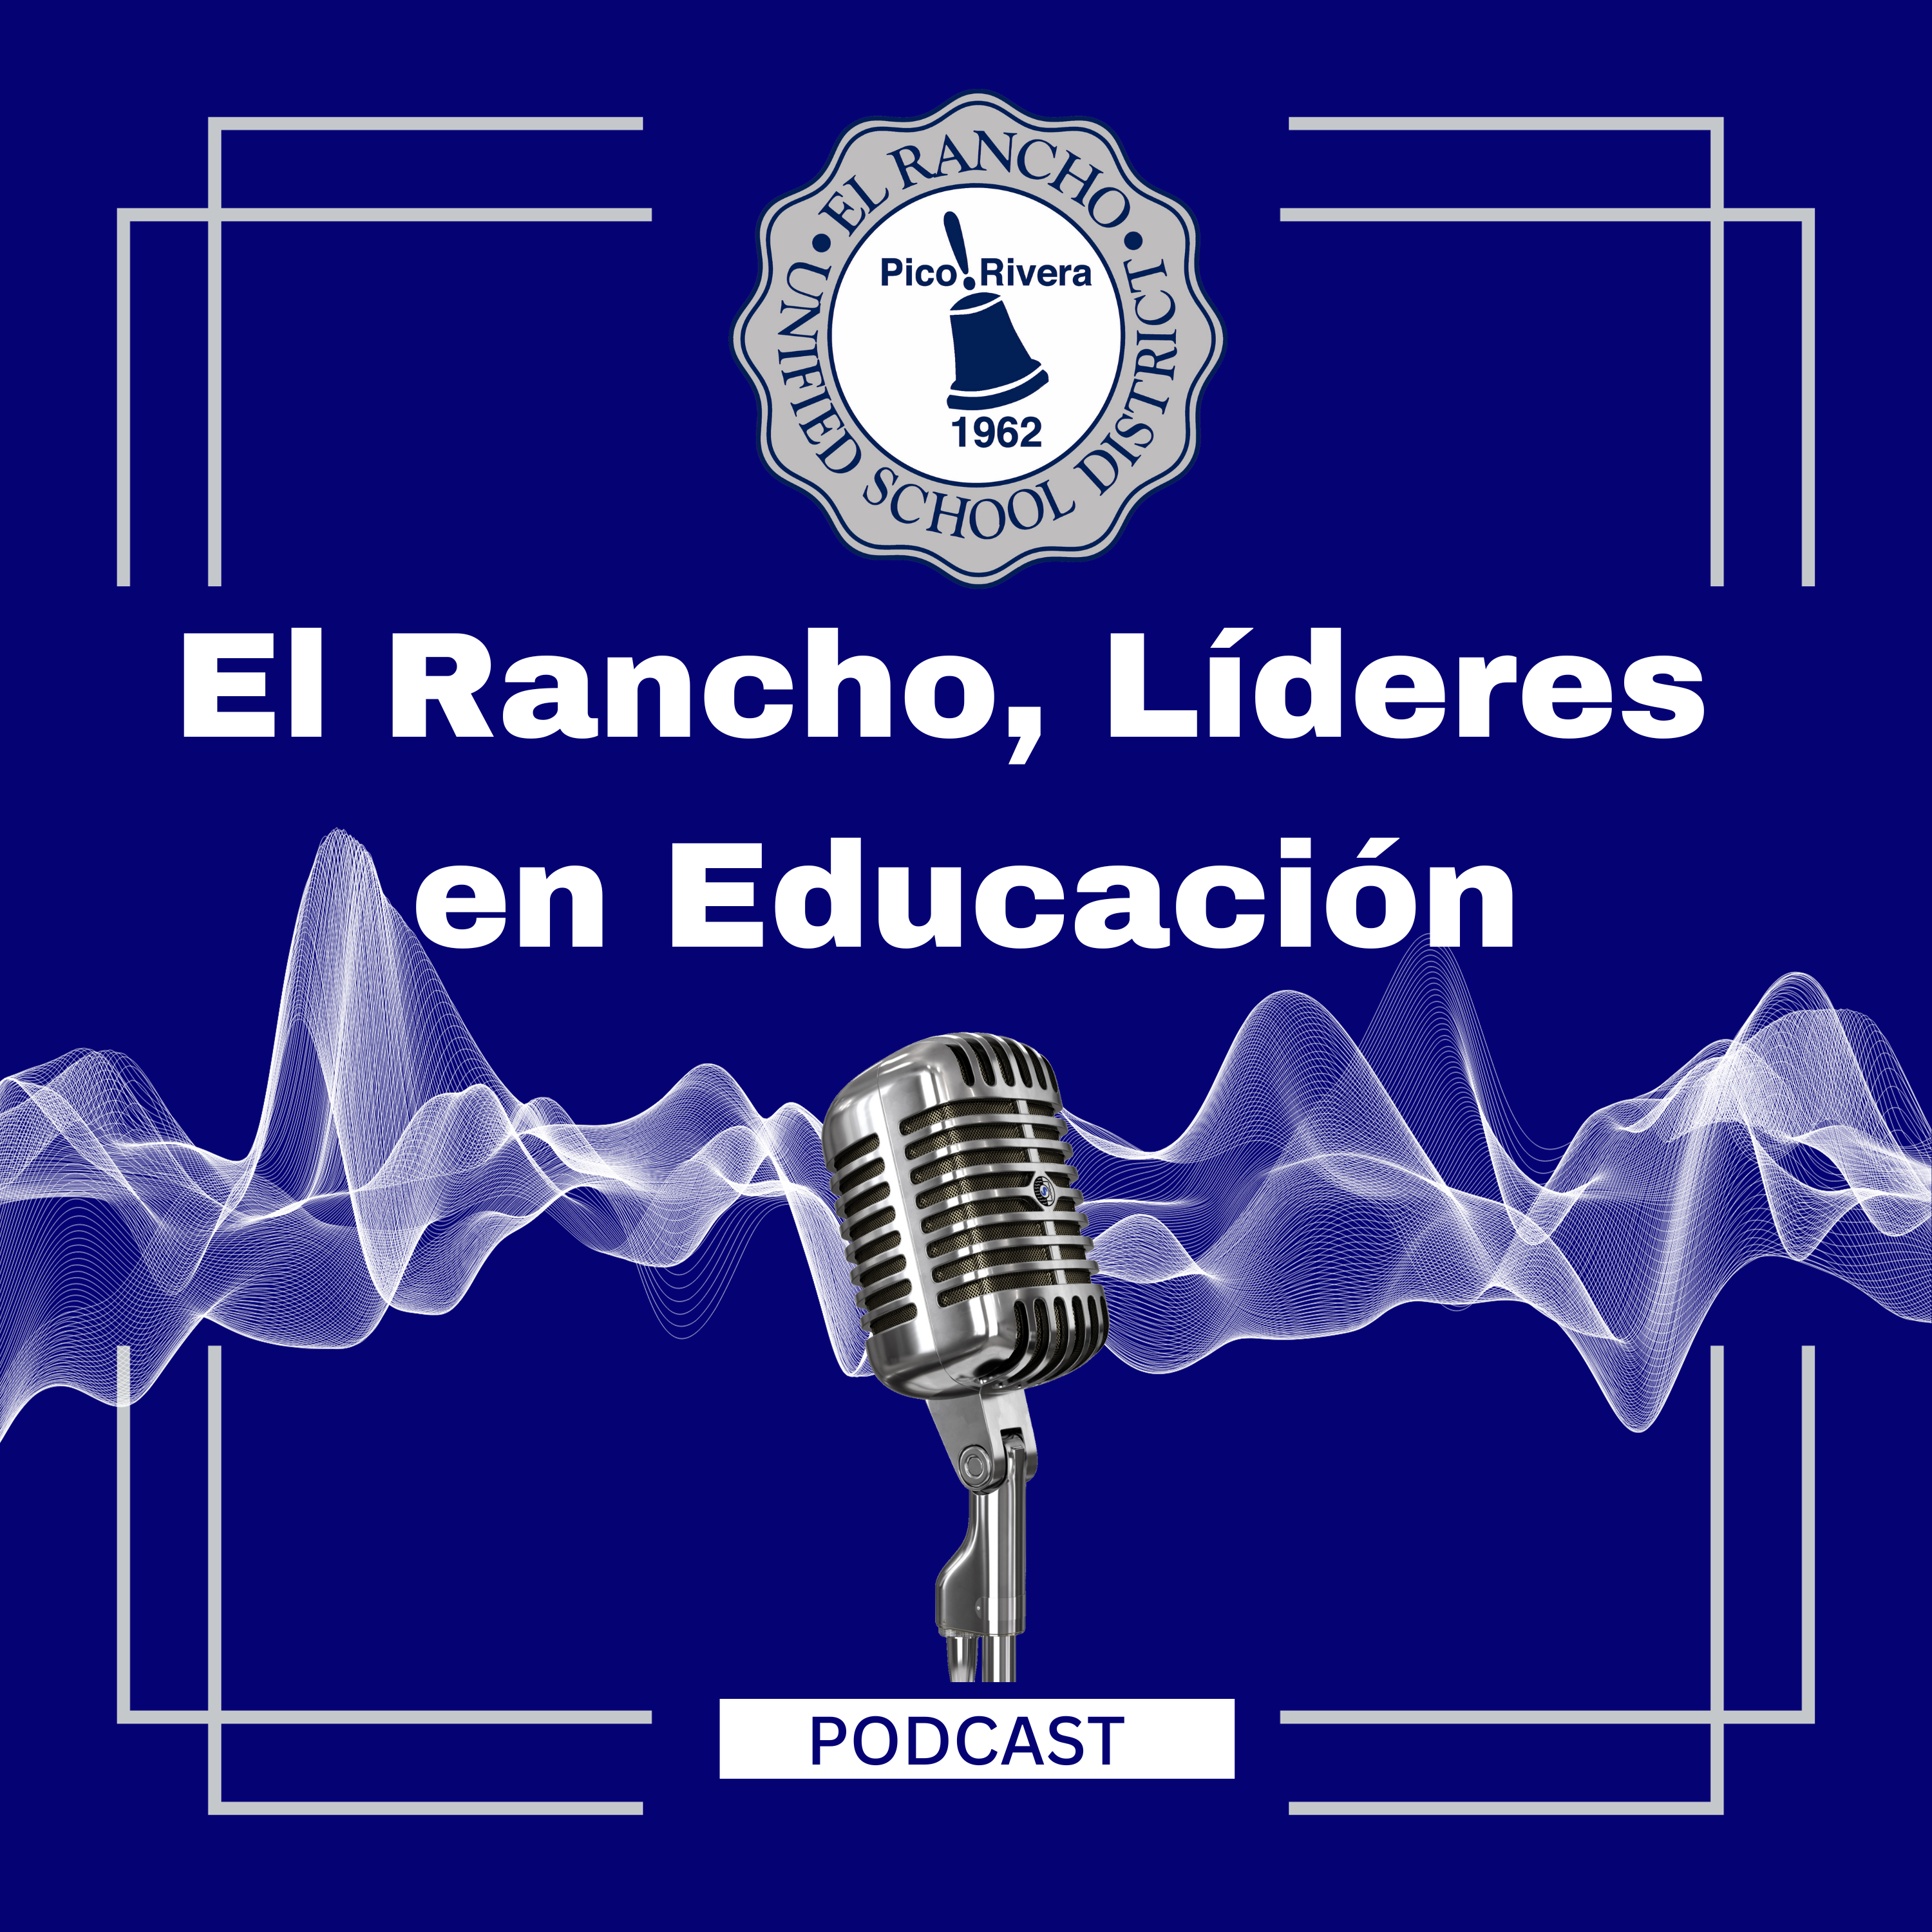 Spanish Podcast